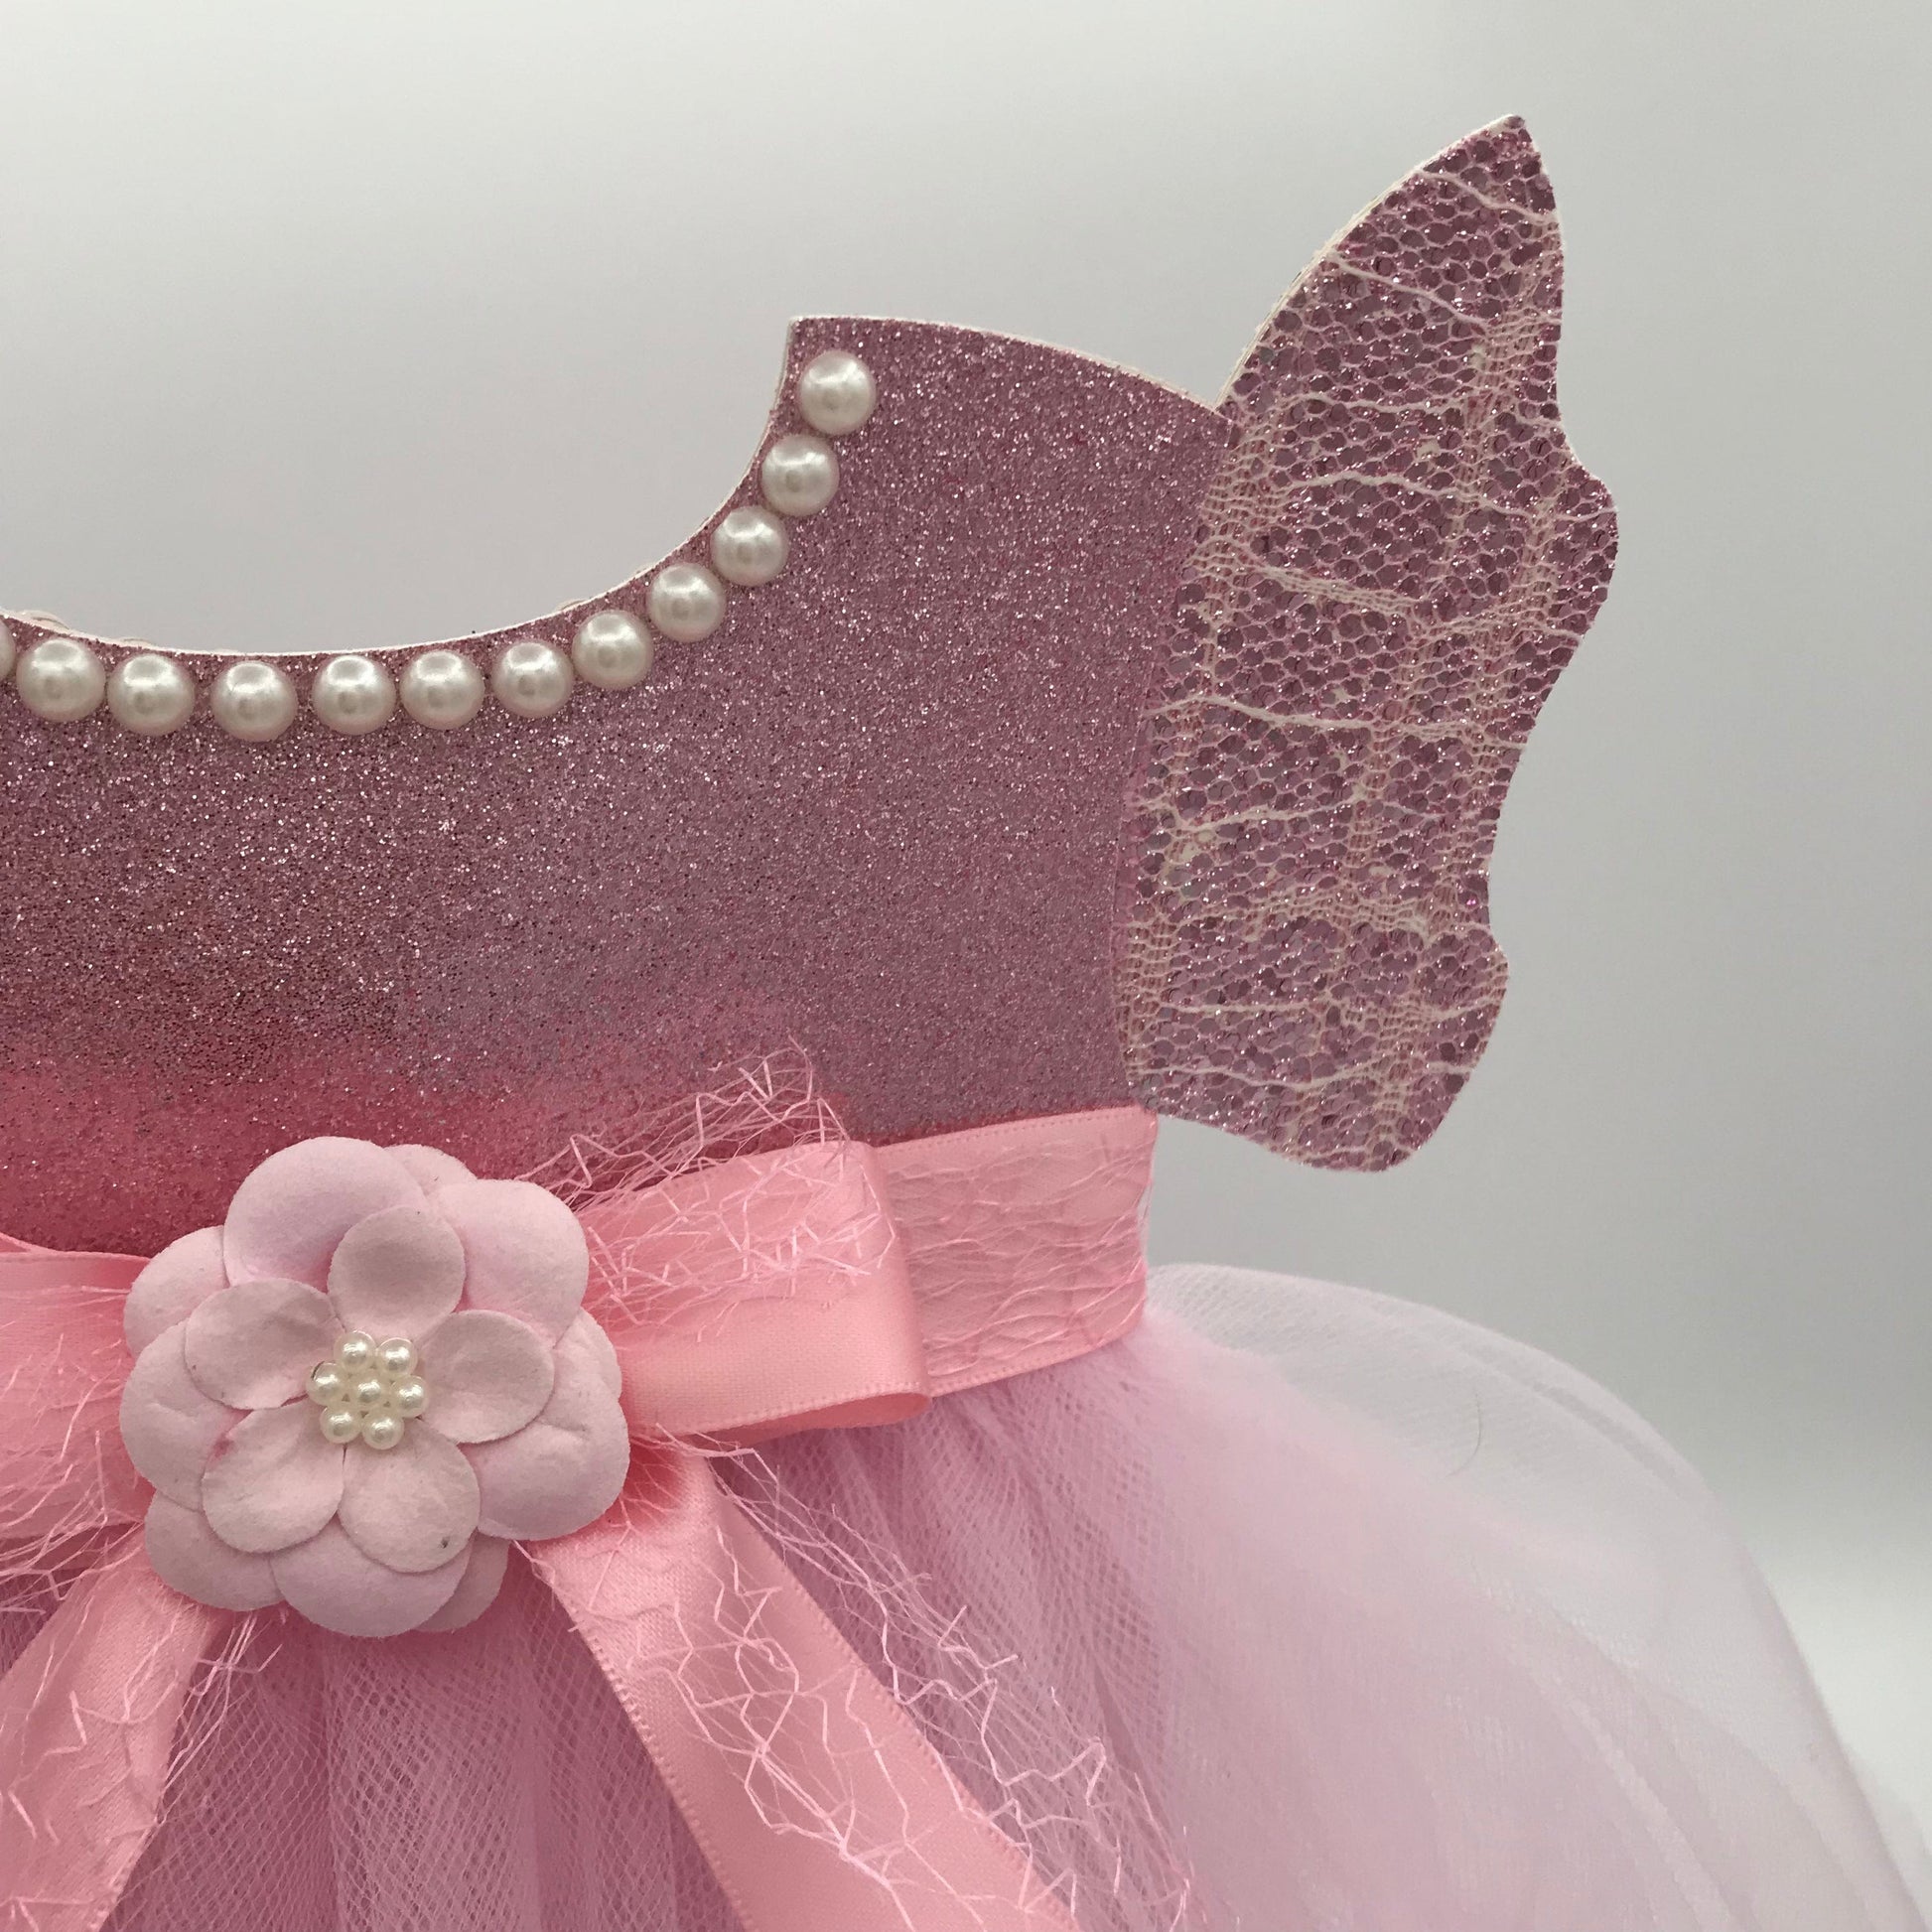 Adriana Ortiz Designs Tutu Dress Centerpiece Tutu dress pink centerpiece for baby shower, birthday party or baptism.